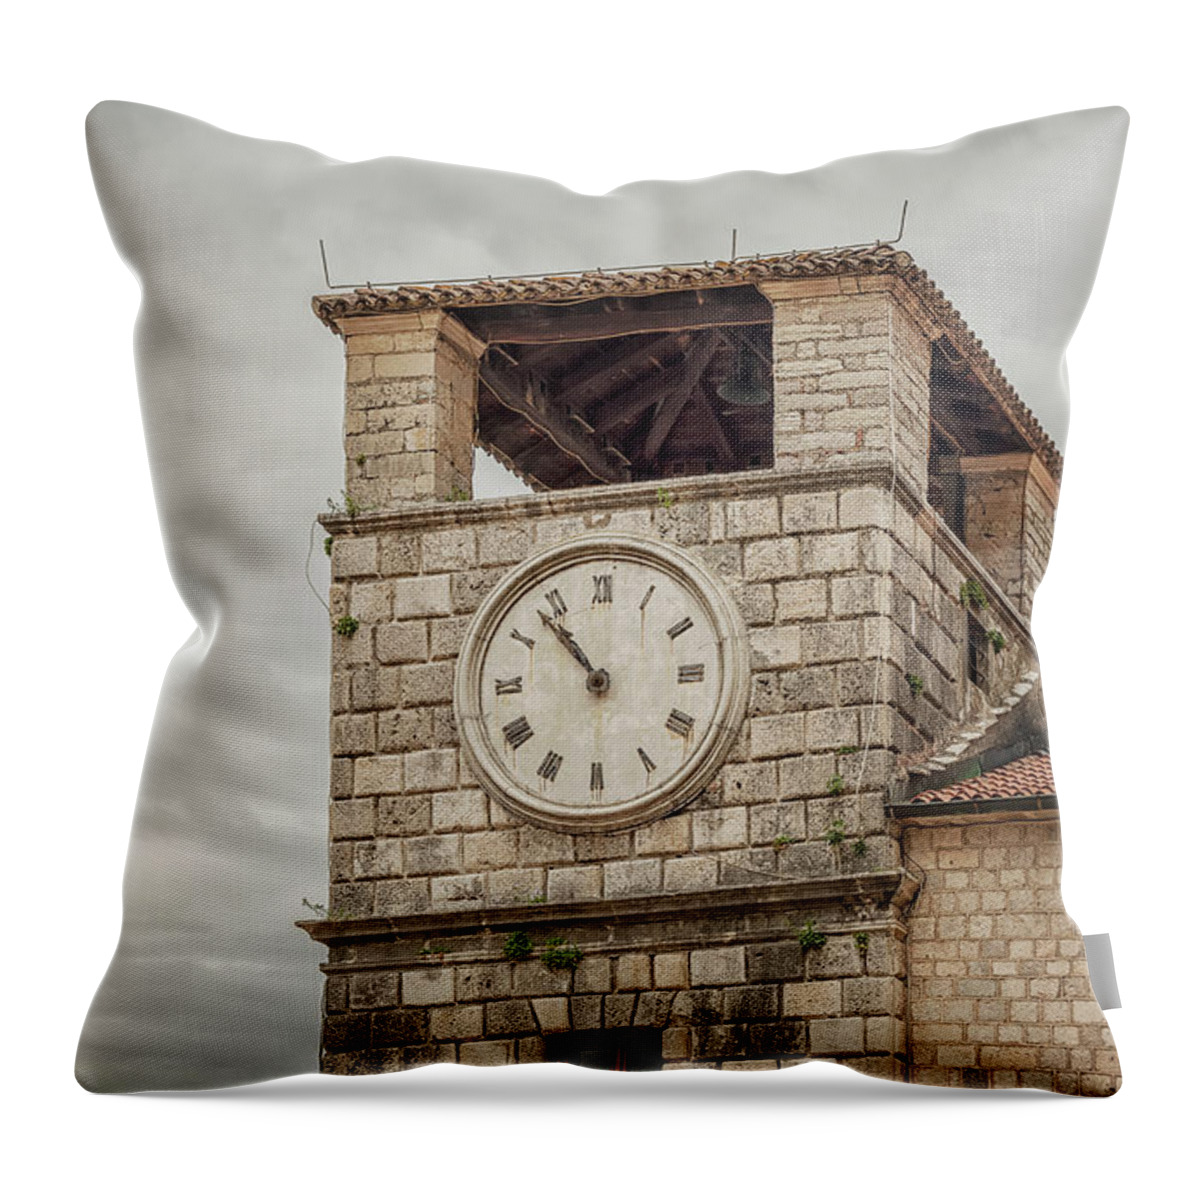 Kotor Throw Pillow featuring the photograph Montenegro Kotor Clock Tower #1 by Antony McAulay